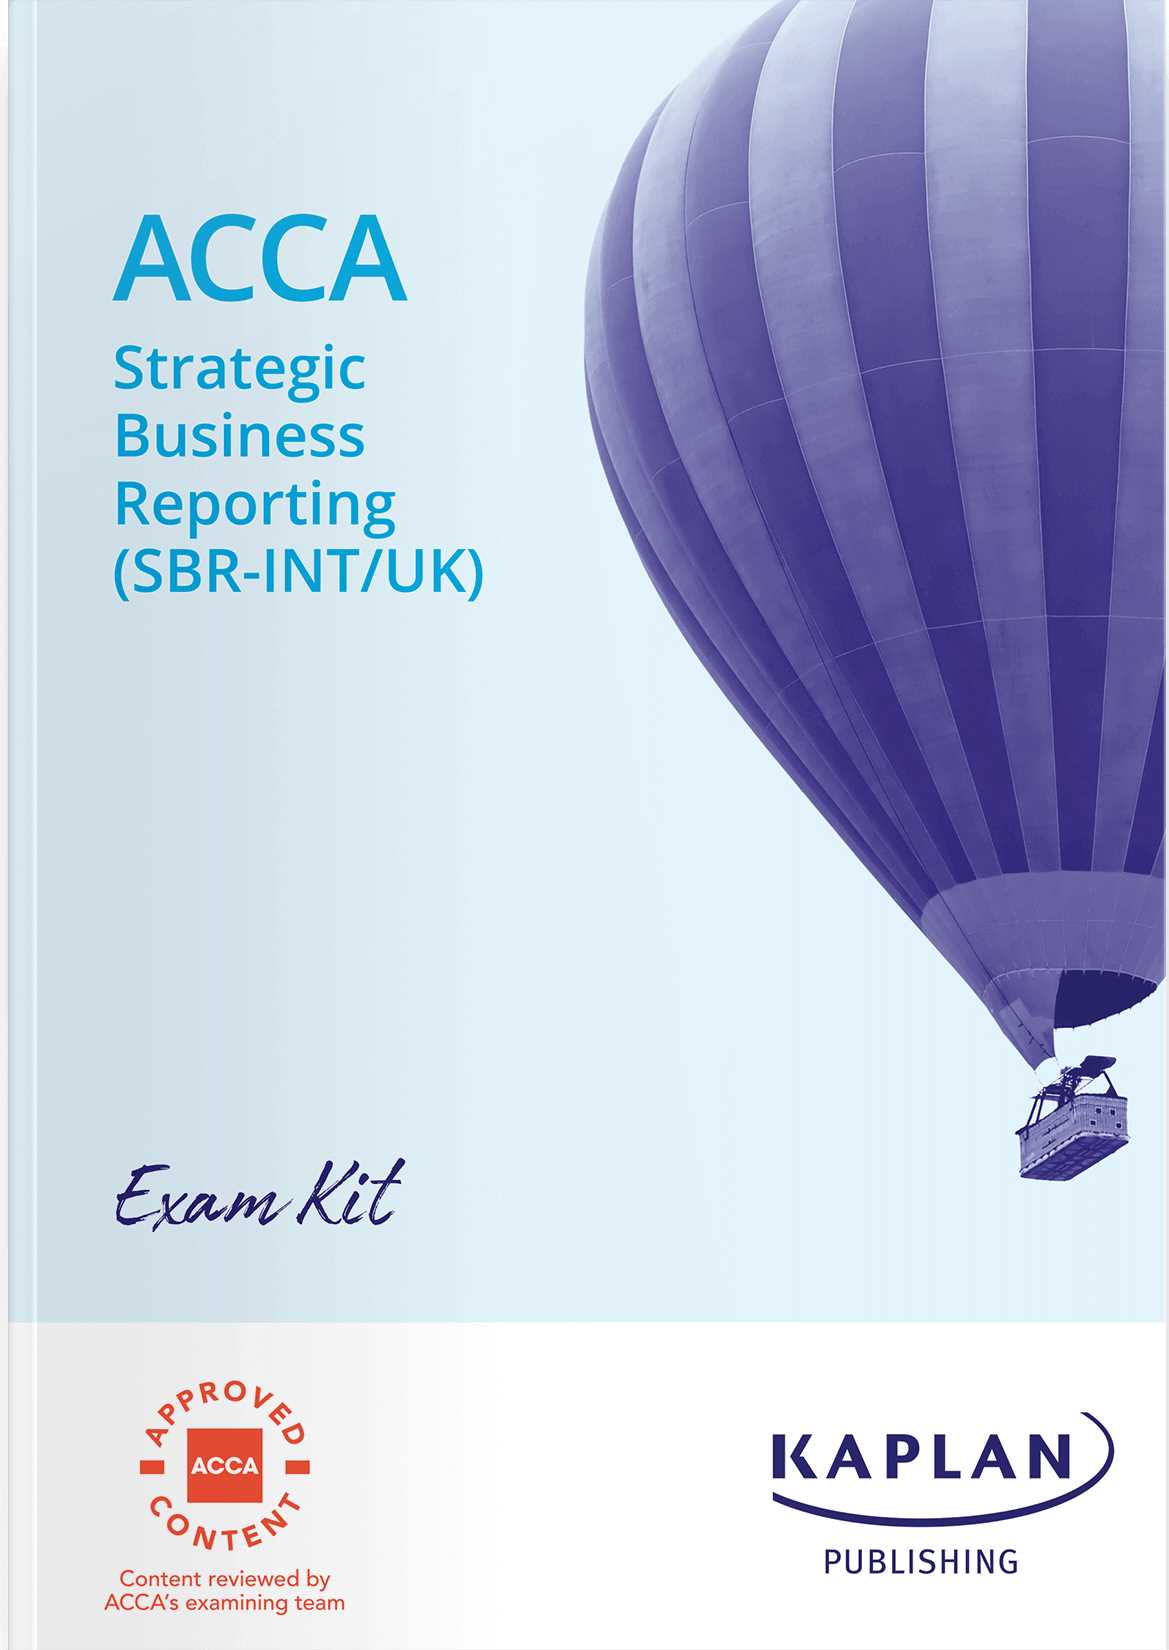 Overview of the Ahima CCA Exam Prep Book